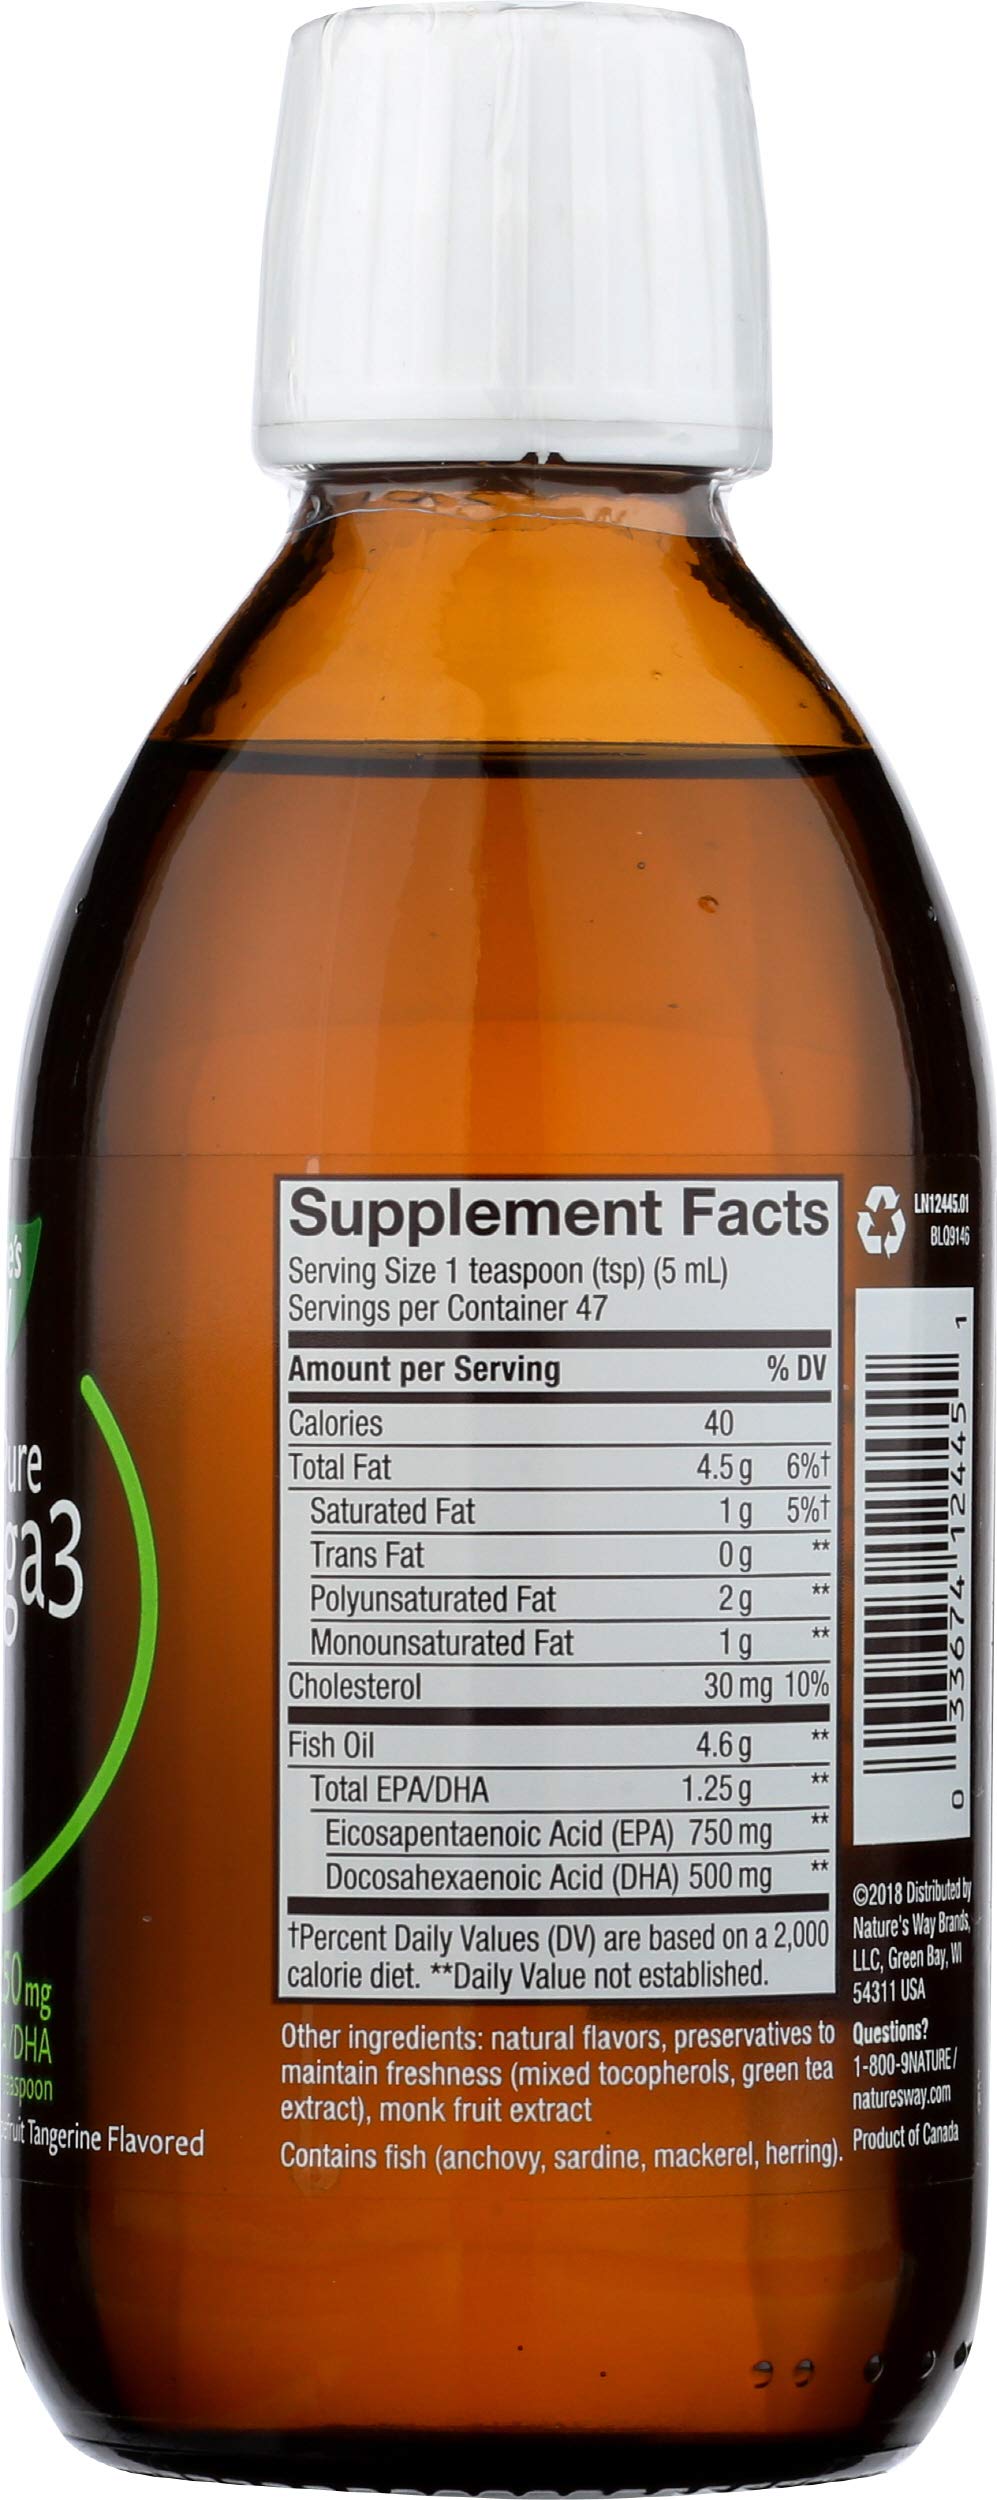 Nature’s Way Ultra Pure Omega3 Liquid Fish Oil Supplement, Grapefruit Tangerine Flavor, 8 Fl Oz